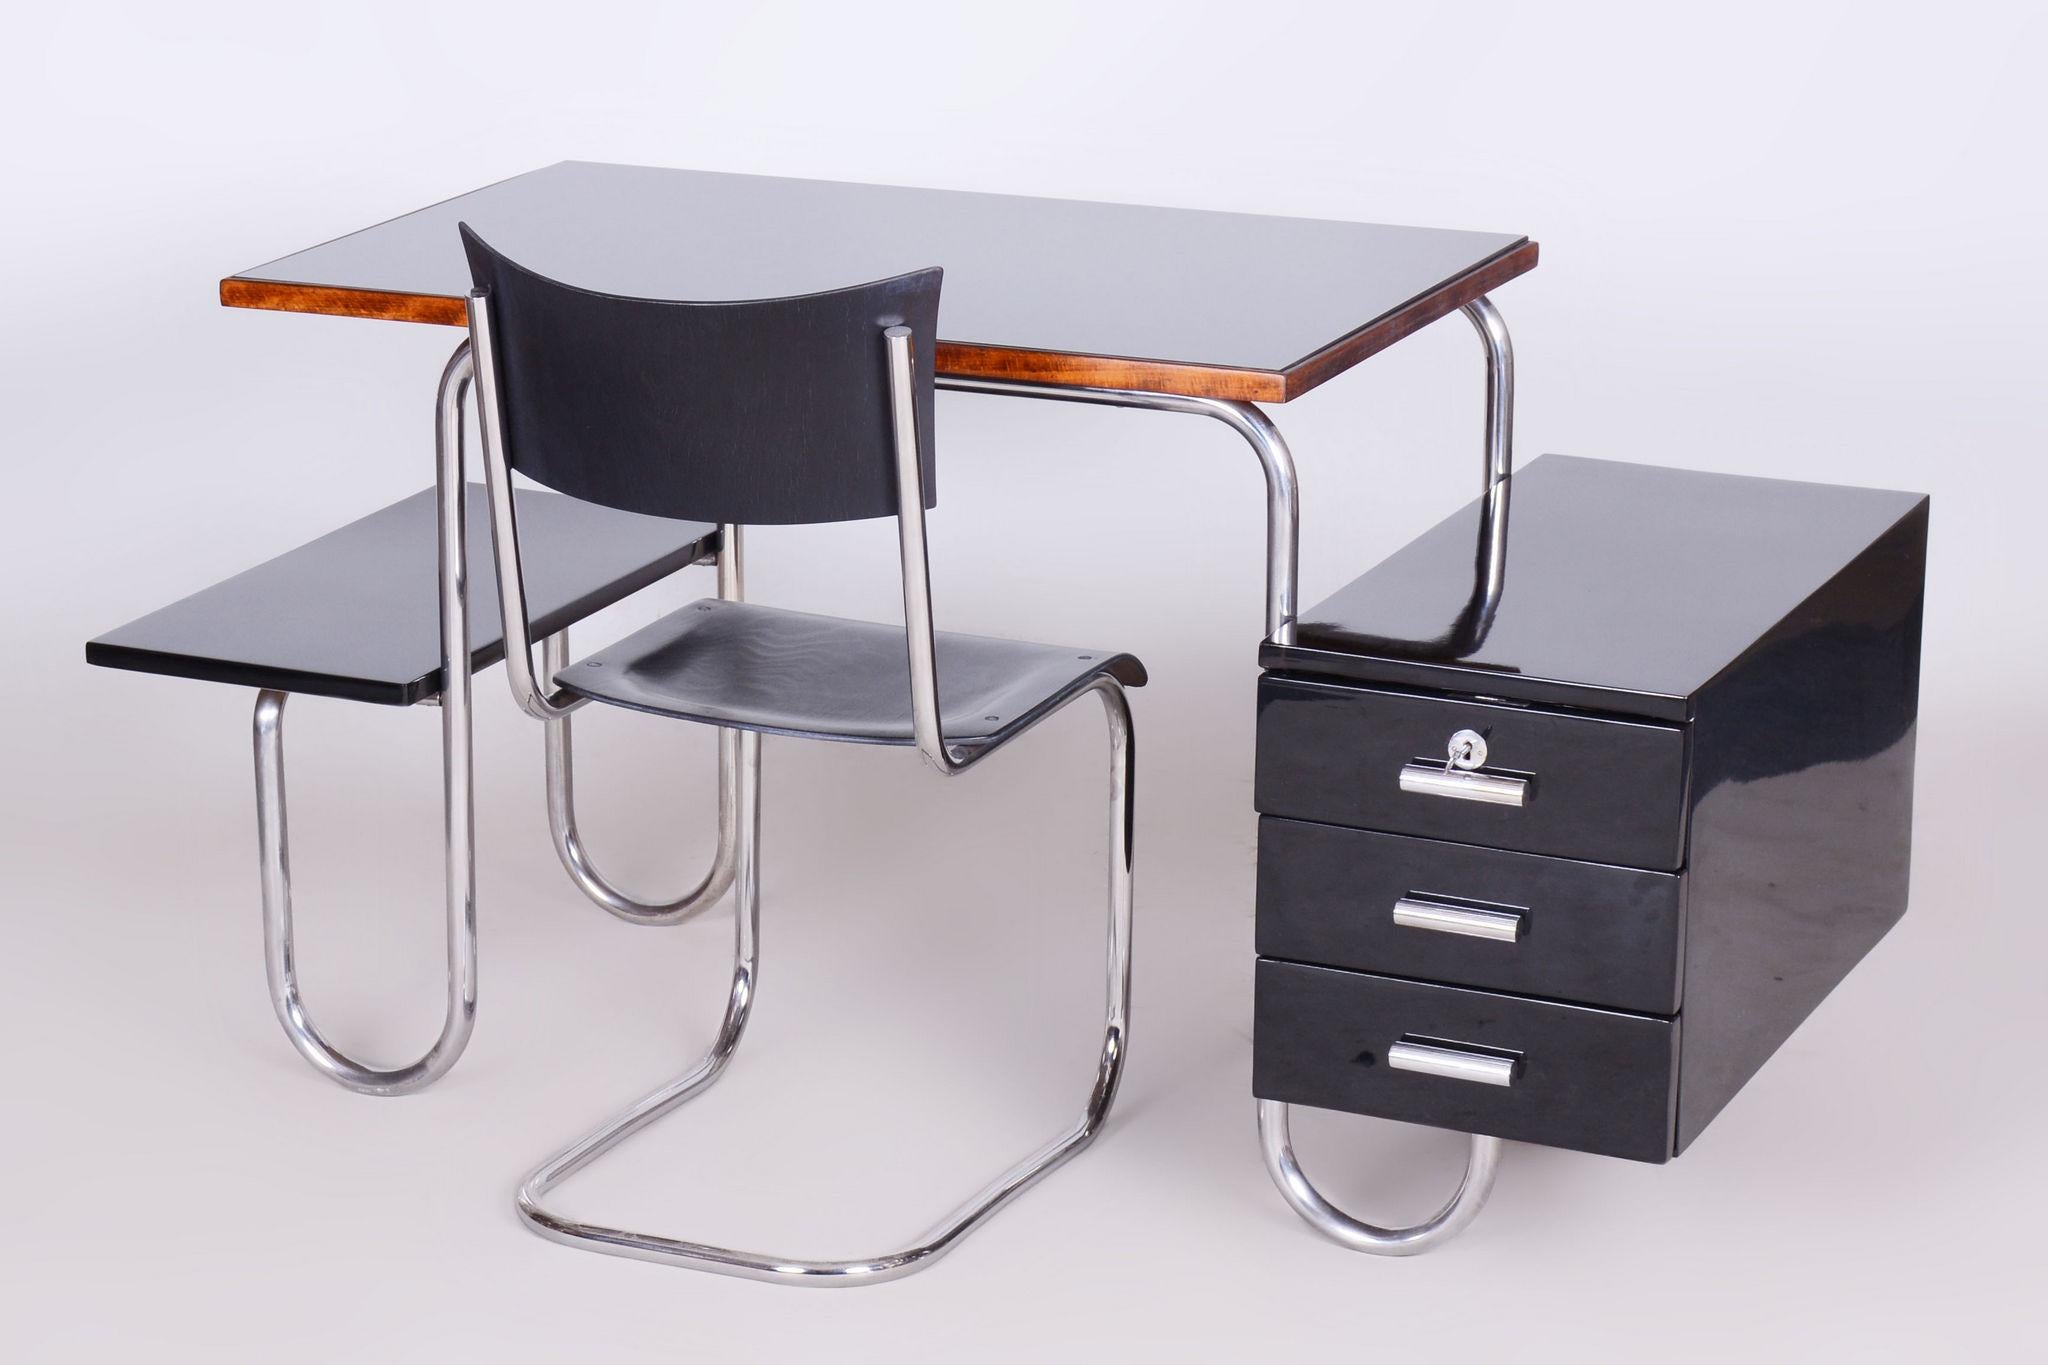 Restored Bauhaus Writing Desk, Chrome-Plated Steel, Black Glass, Czechia, 1930s For Sale 2